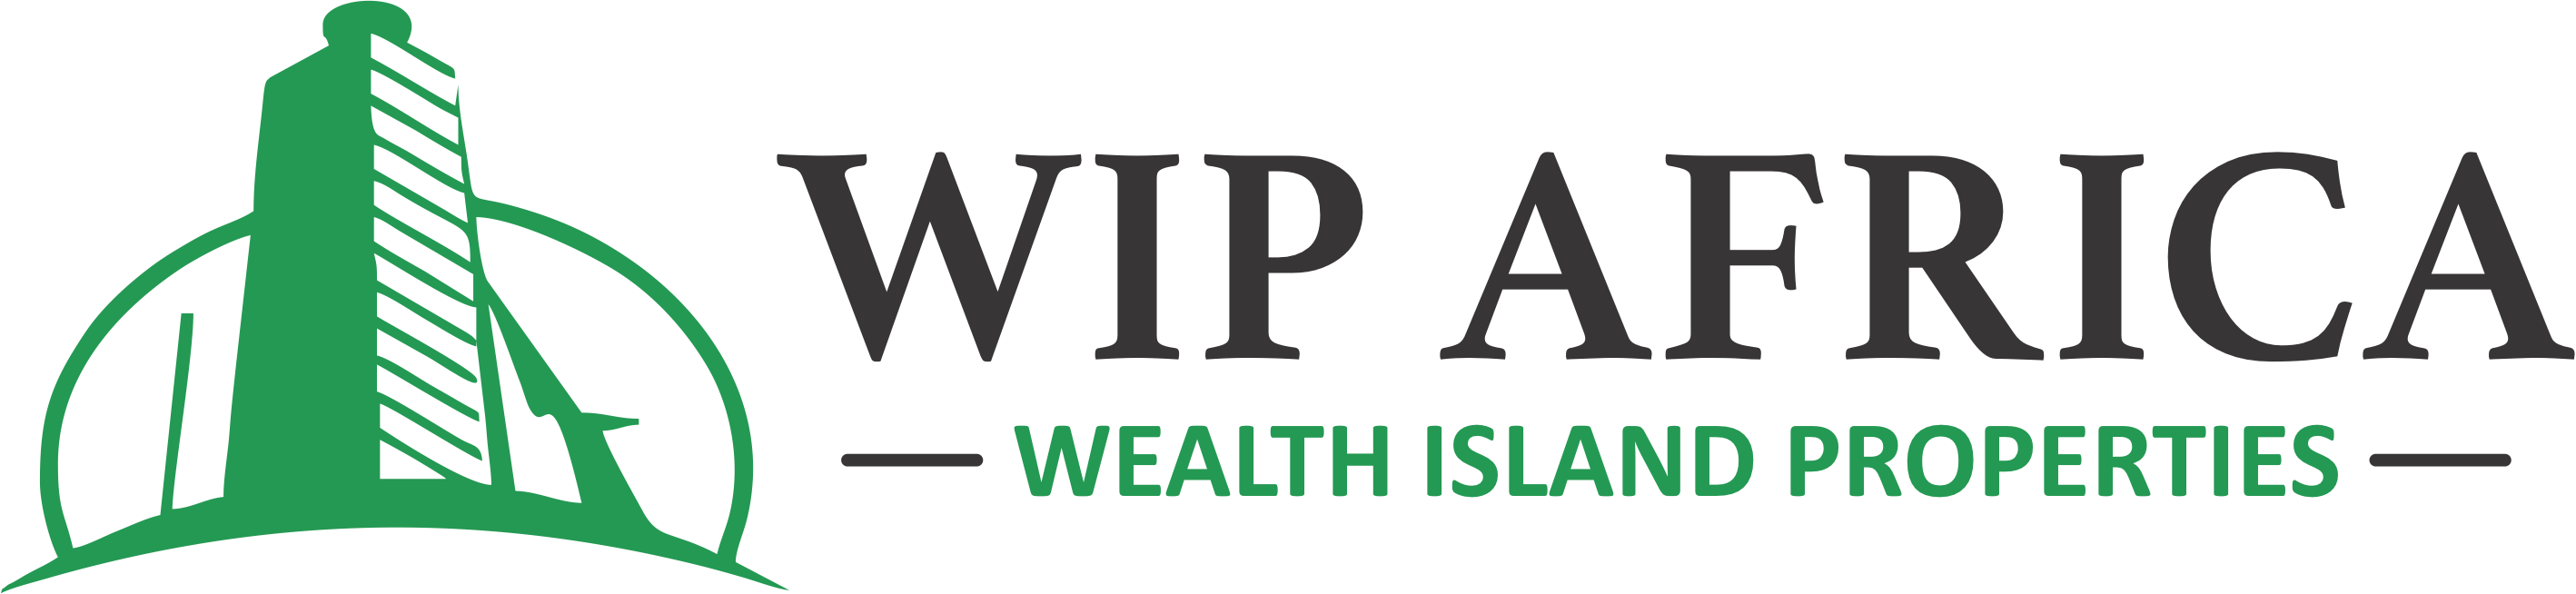 wipafrica logo